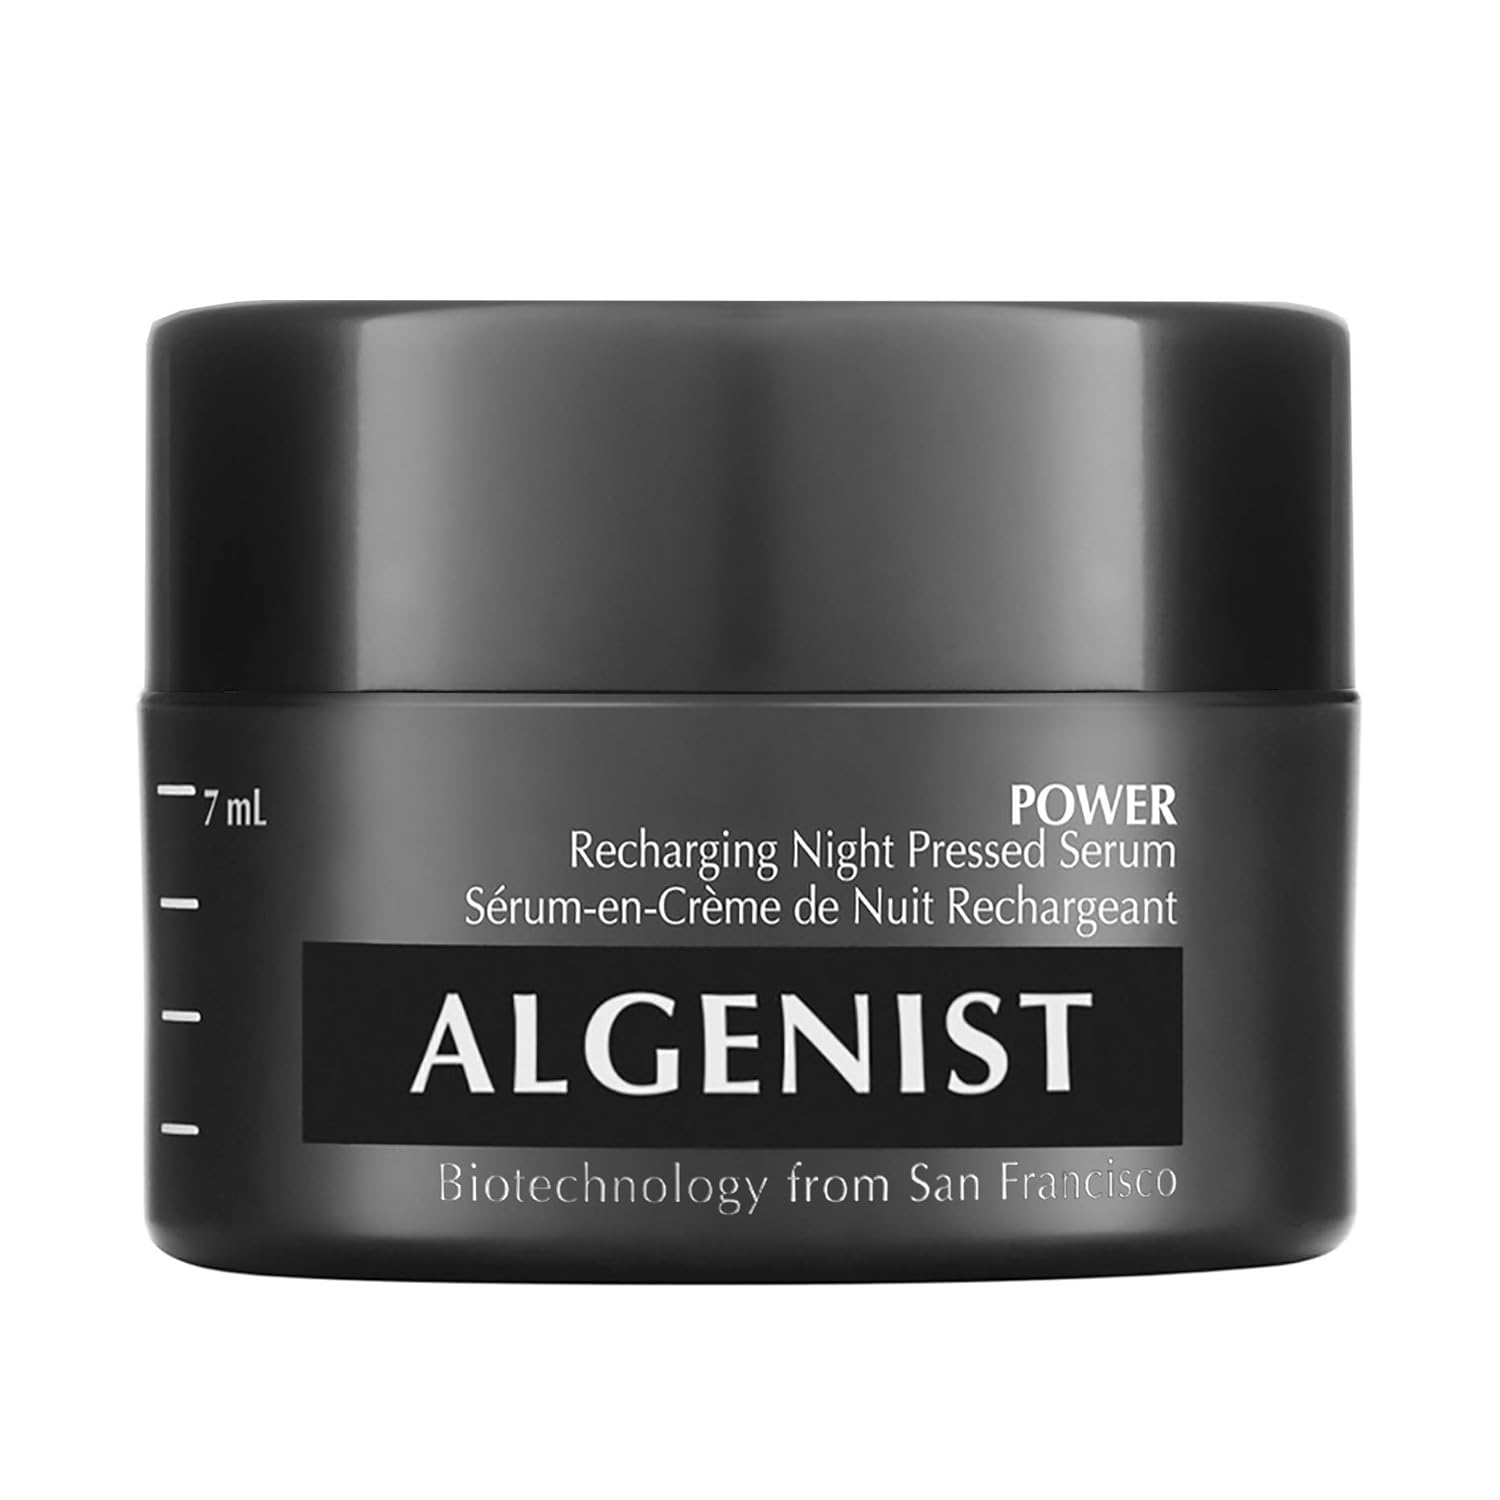 Algenist POWER Recharging Night Pressed Serum - Overnight Treatment to Refine Dull, Uneven Texture with Algae, Collagen & Coconut Water - Non-Comedogenic & Hypoallergenic